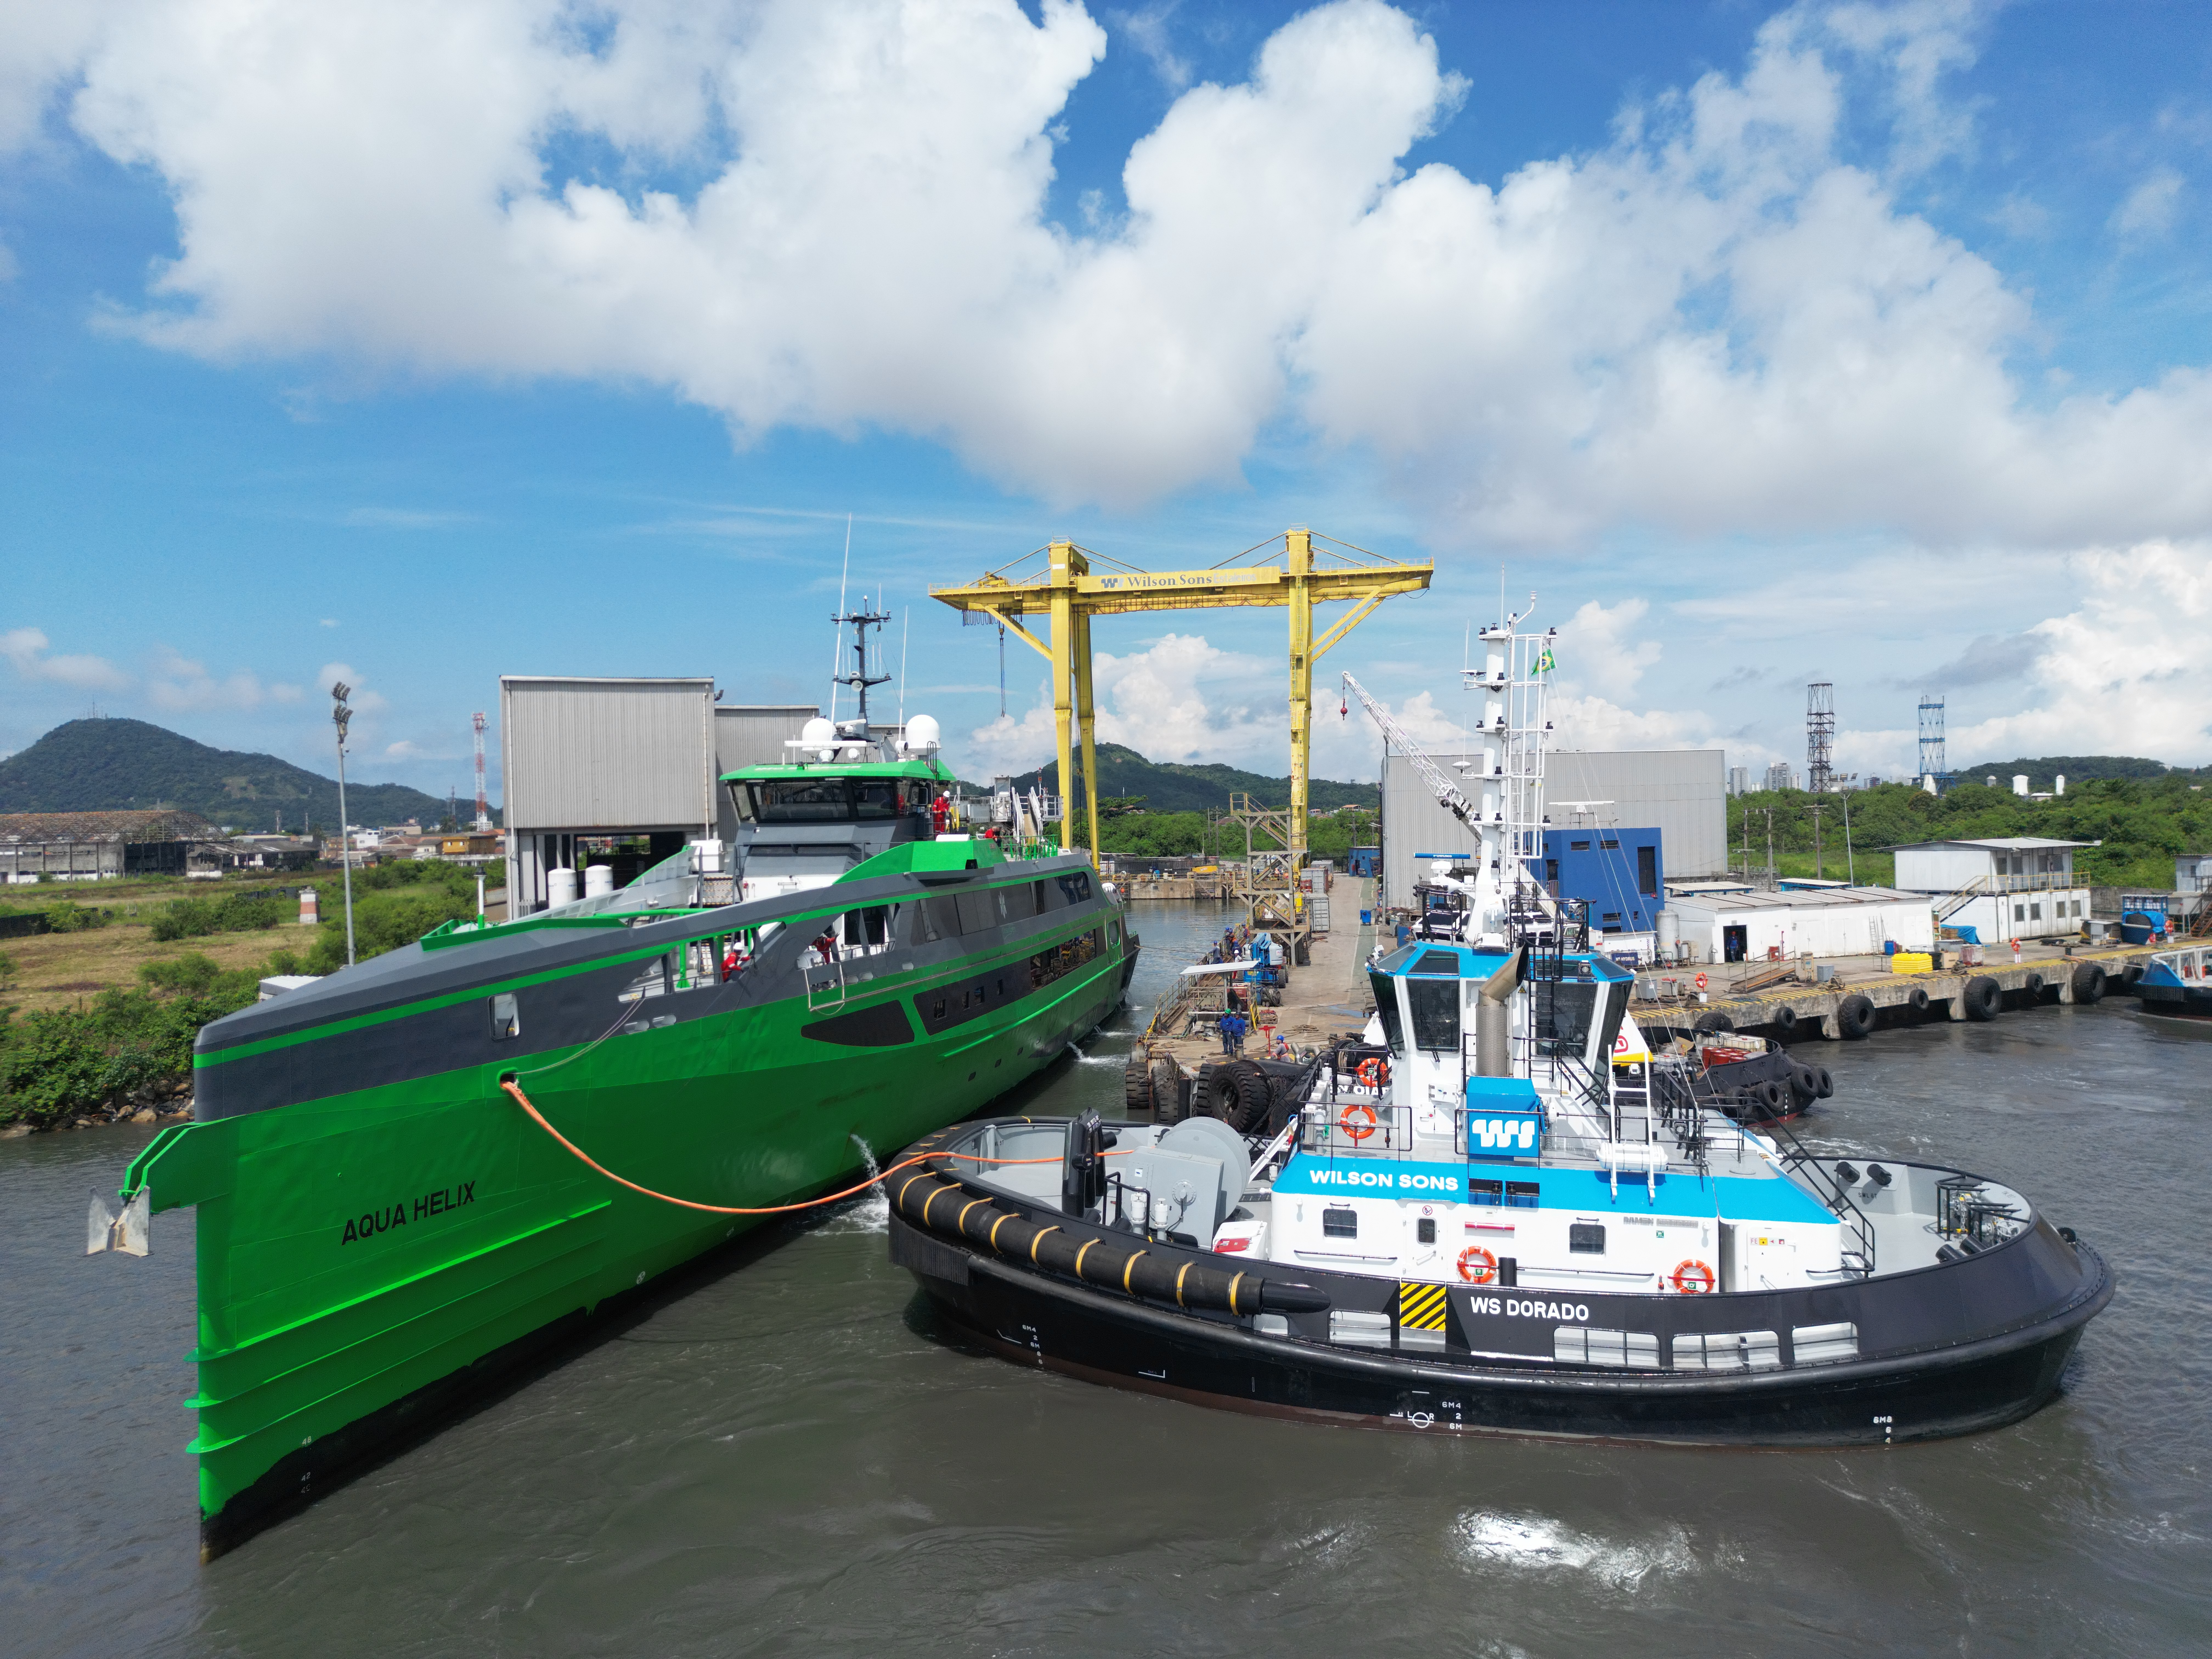 Wilson Sons does unprecedented docking of aluminium ship Aqua 